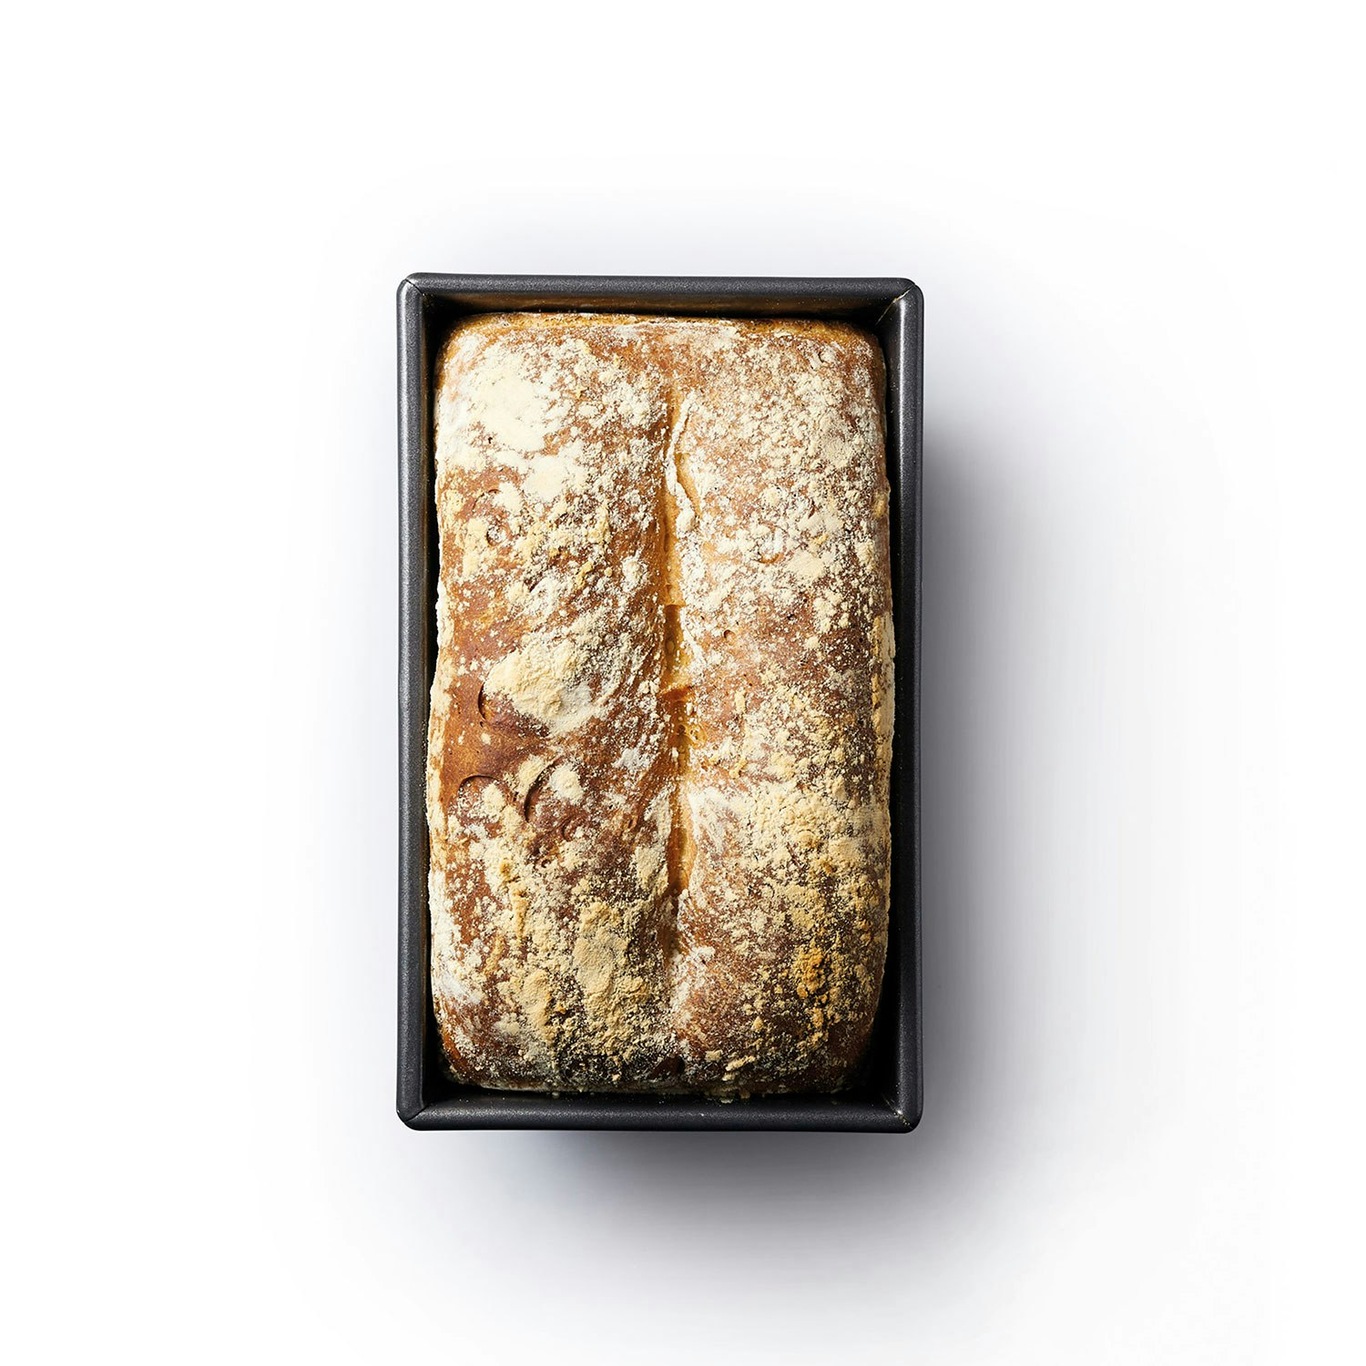 https://royaldesign.com/image/2/kitchen-craft-masterclass-loaf-pan-9x15-cm-2?w=800&quality=80